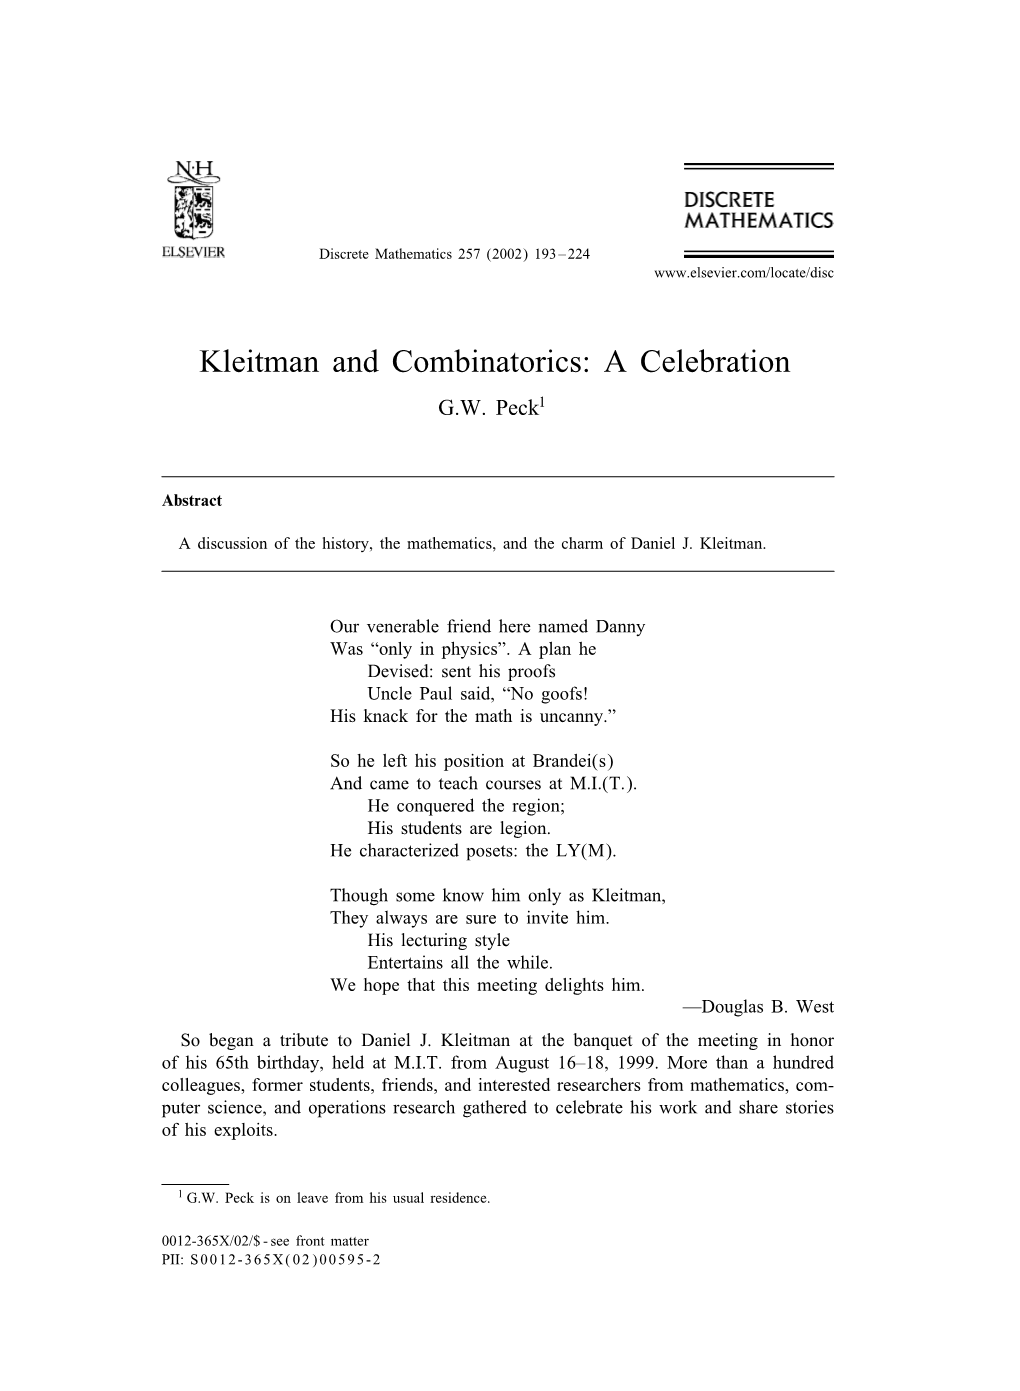 Kleitman and Combinatorics: a Celebration G.W